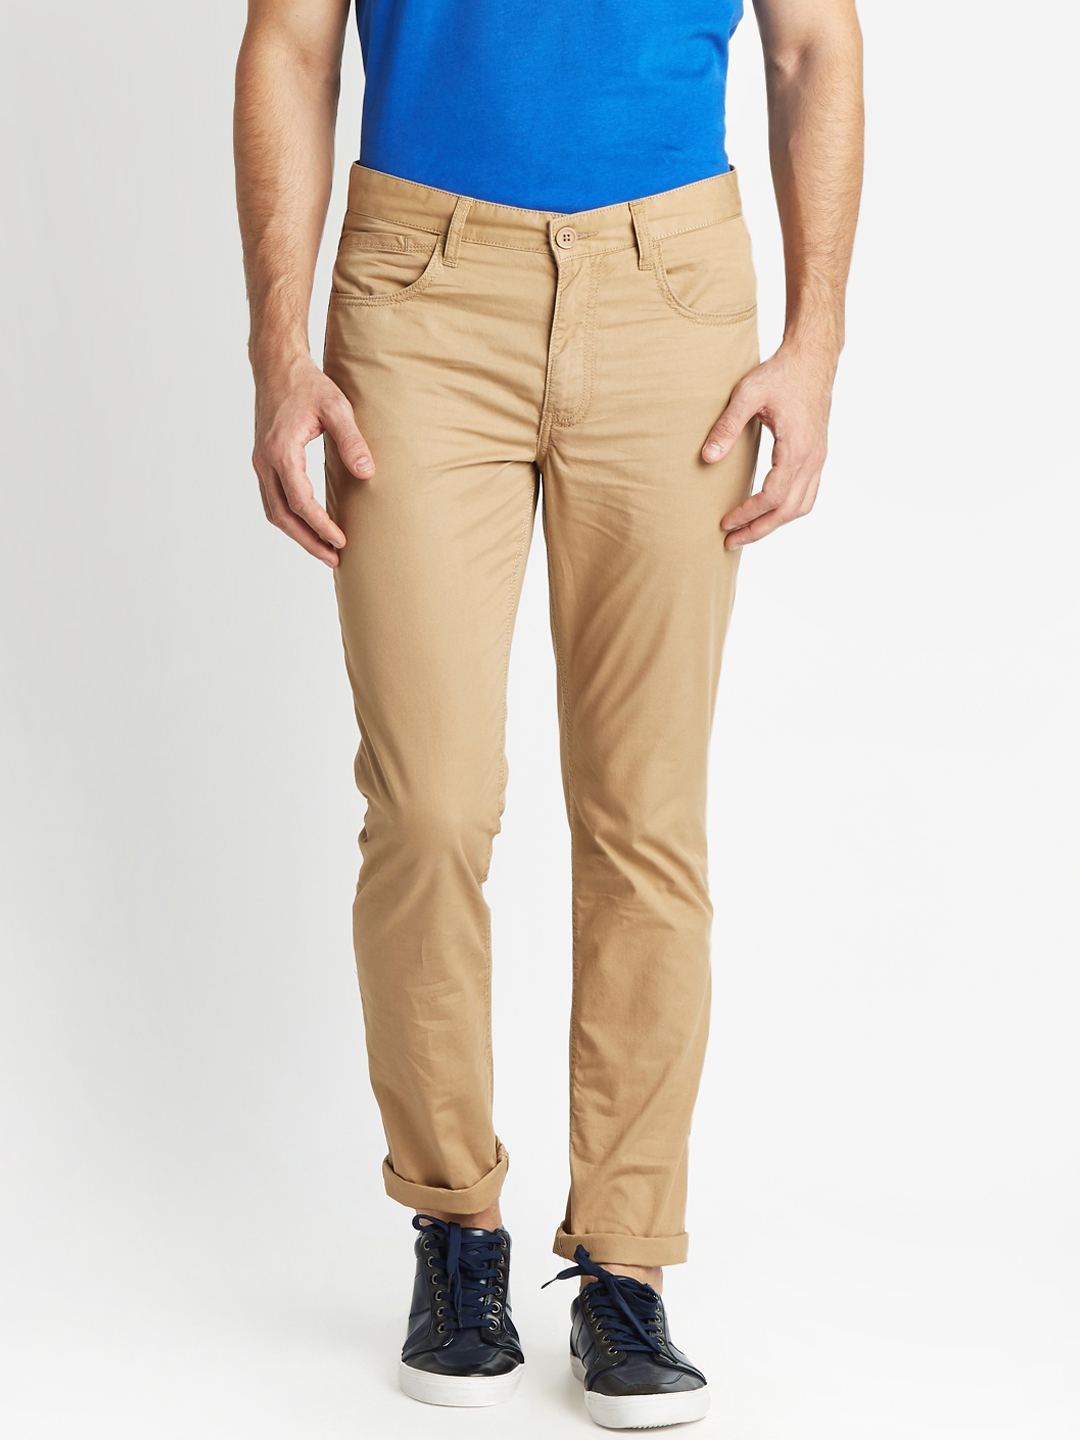 Buy Urban Ranger By Pantaloons Men Brown Slim Fit Solid Regular ...